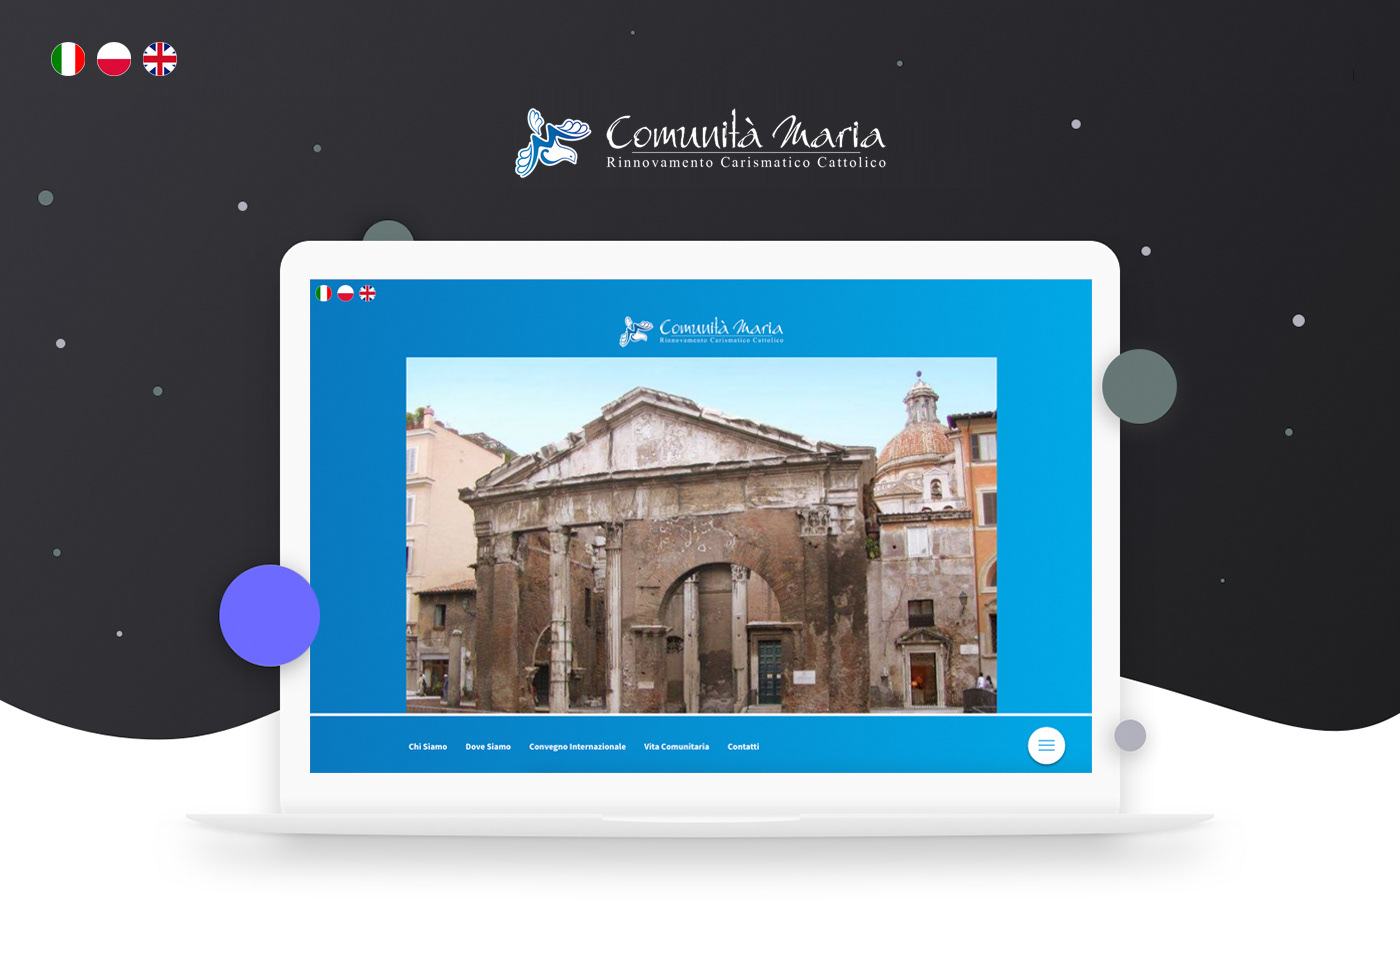 COMUNITà MARIA Web Design  web development  Rinnovamento Carismatico Cattolico UIX wordpress Woocommerce payments booking online https